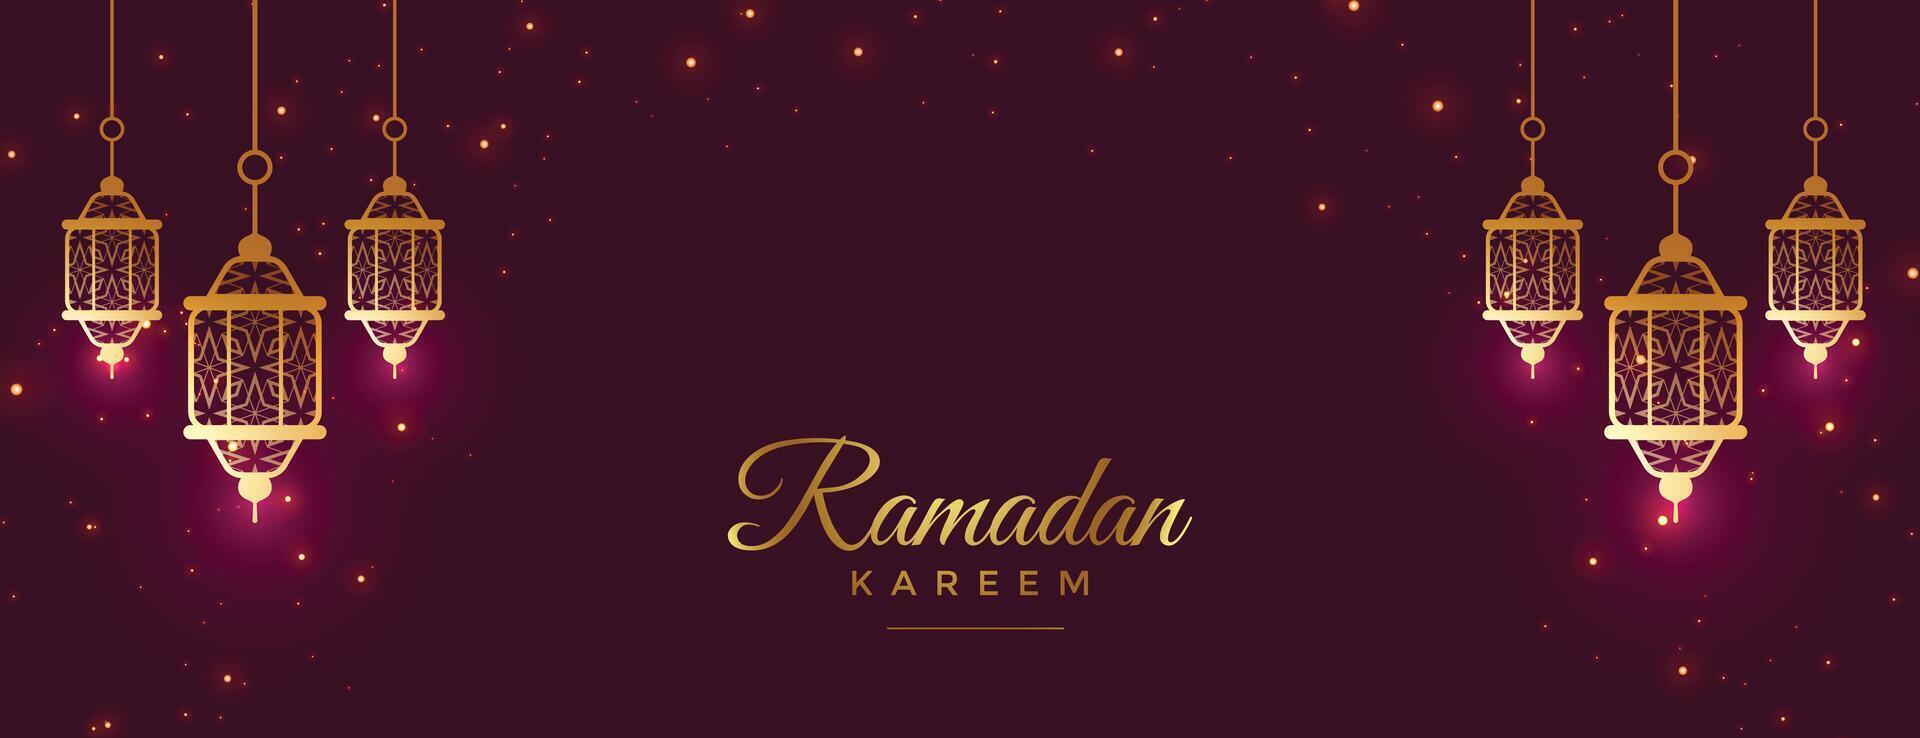 mooie ramadan kareem-vieringsbanner met lampendecoratie vector